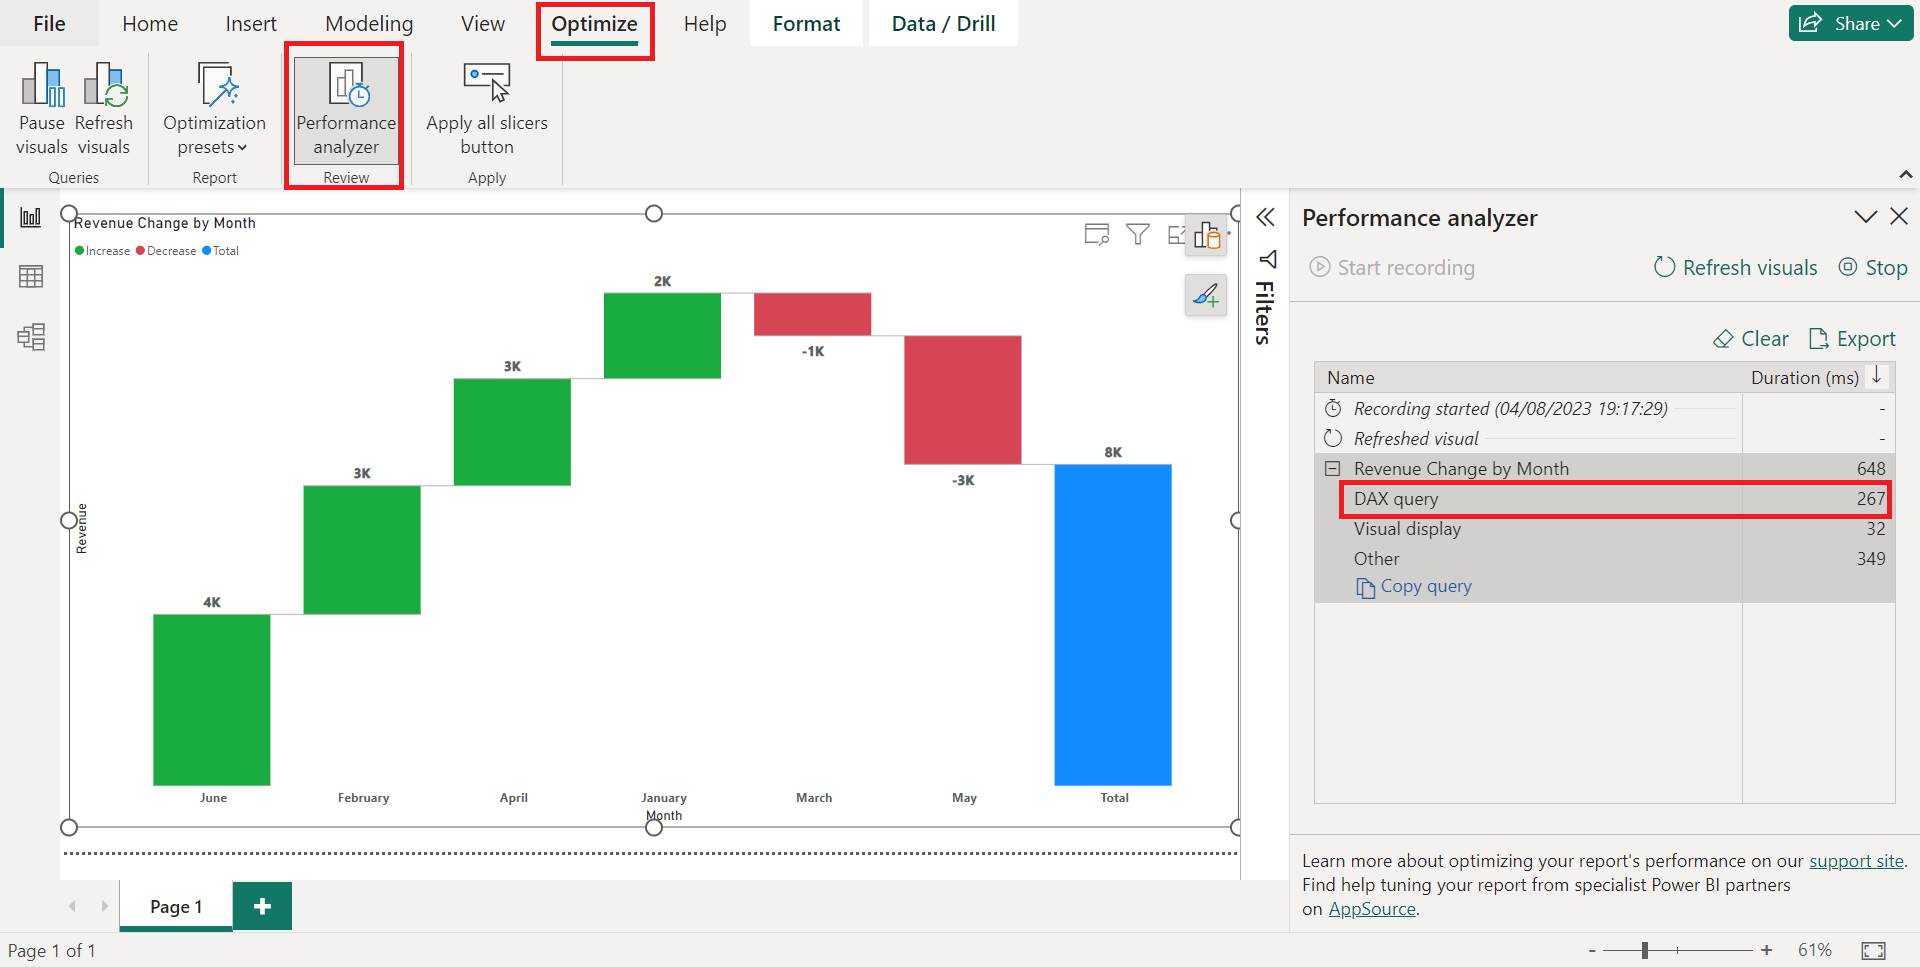 Use the performance analyzer to optimize performance and create custom visual